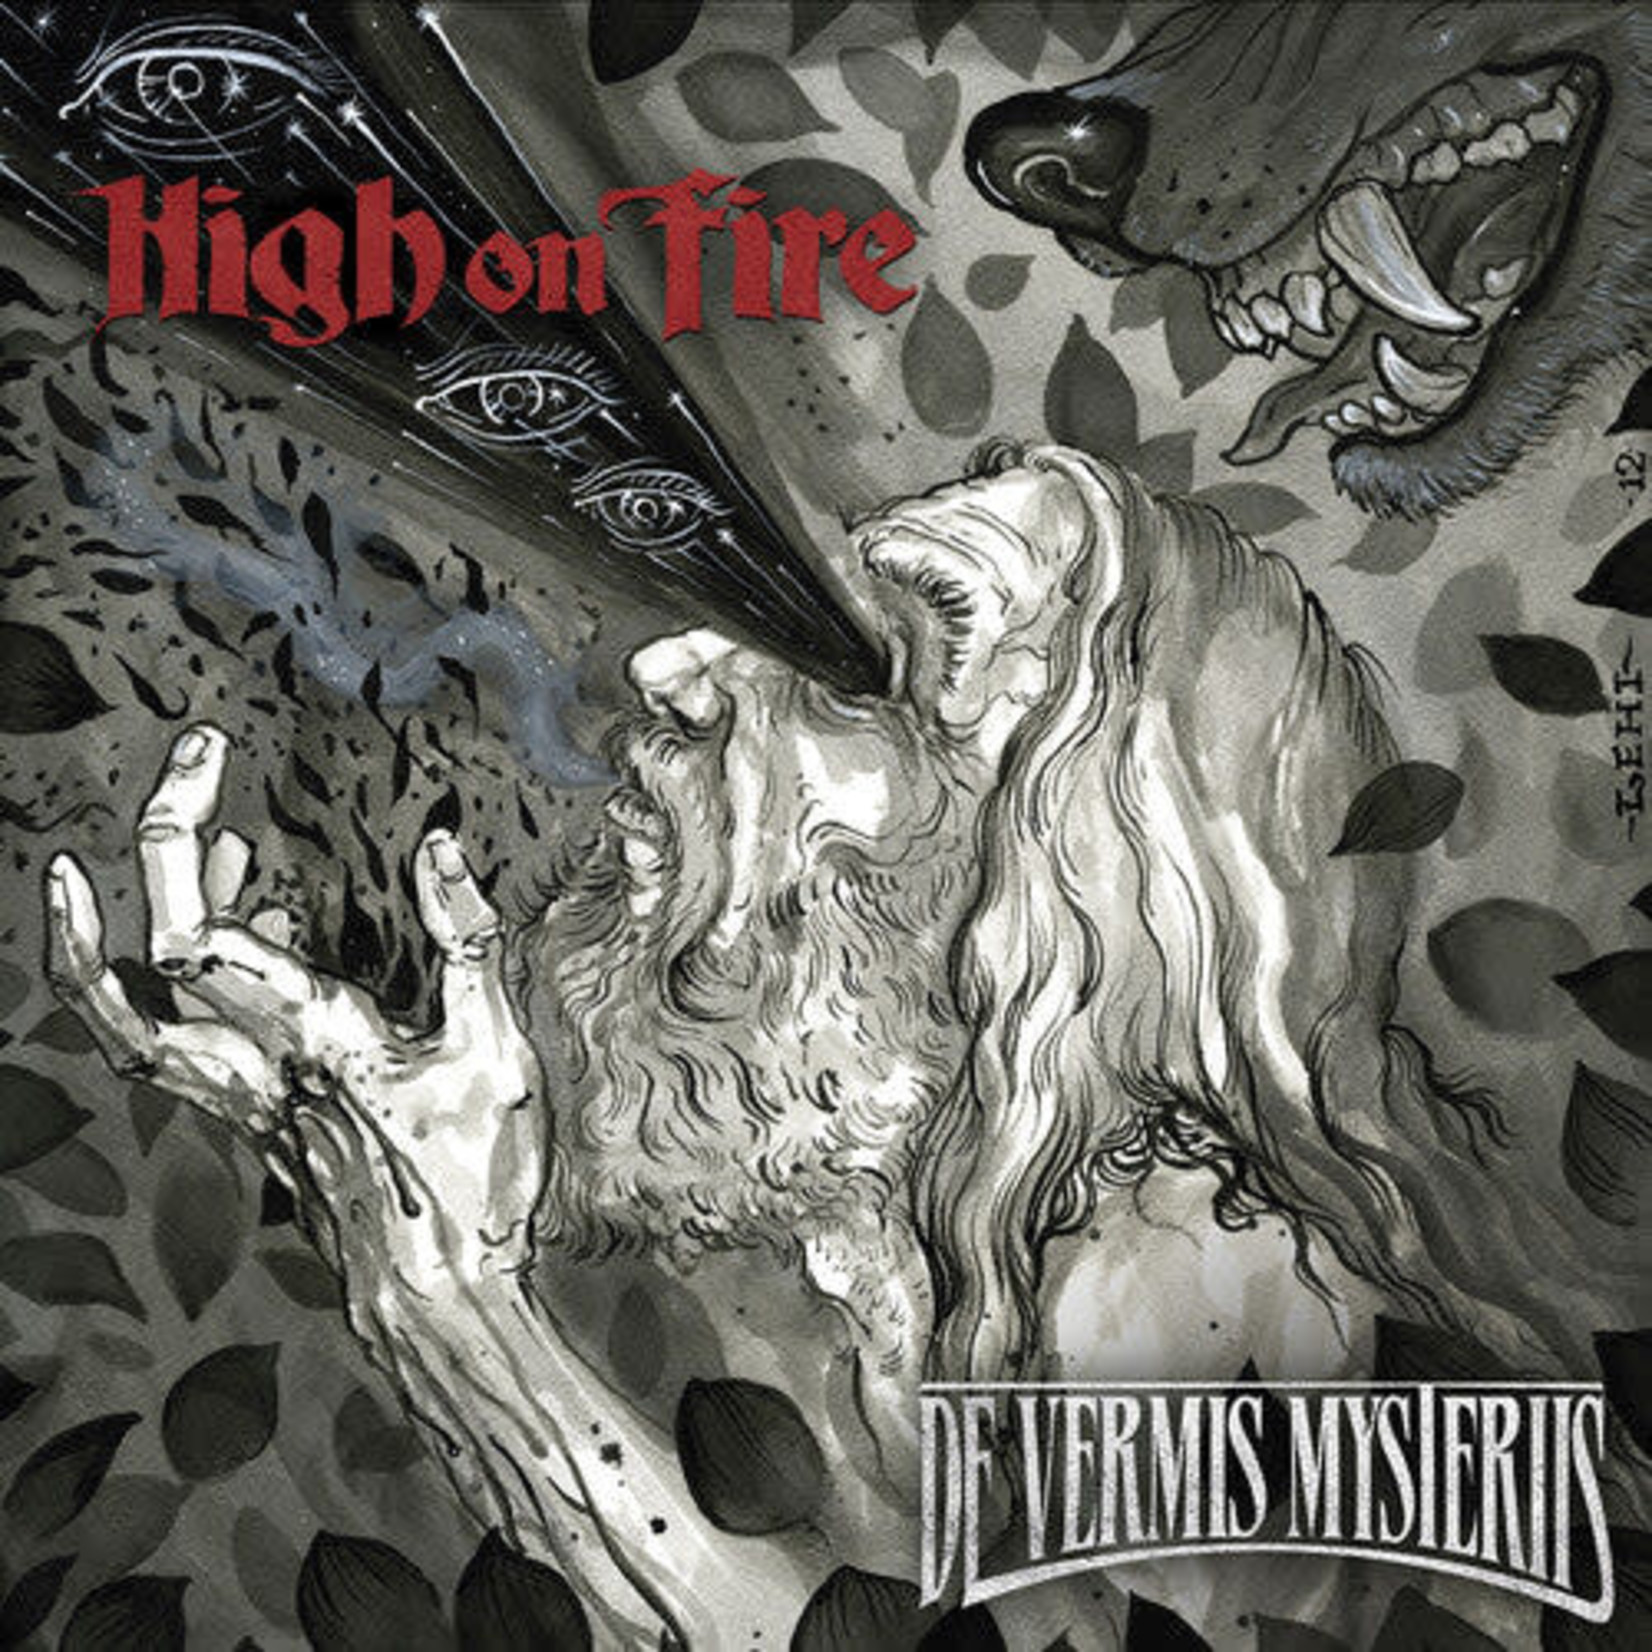 [New] High On Fire - De Vermis Mysteriis (2LP, black ice vinyl)